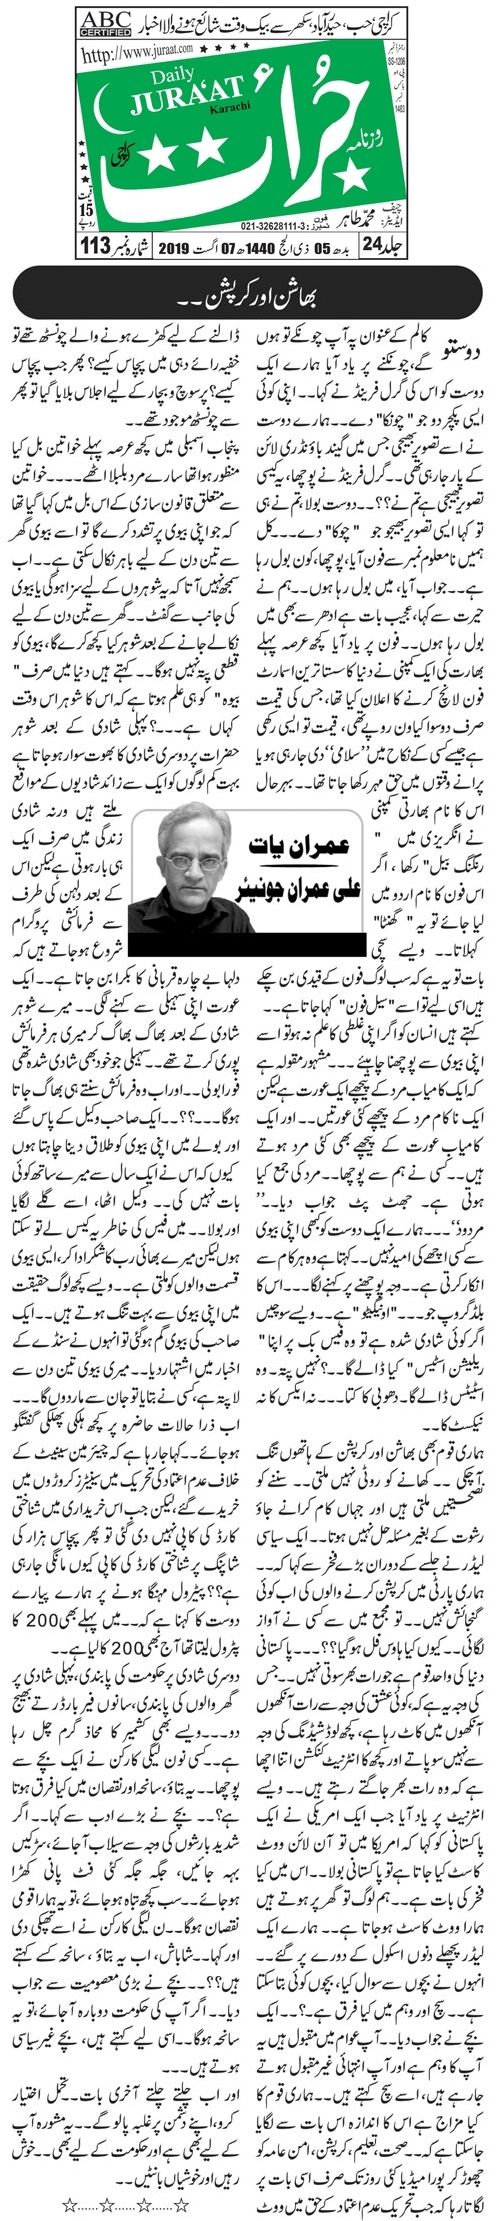 Bhashan Aur Corruption By Ali Imran Junior Imran Yaat Daily Jurrat